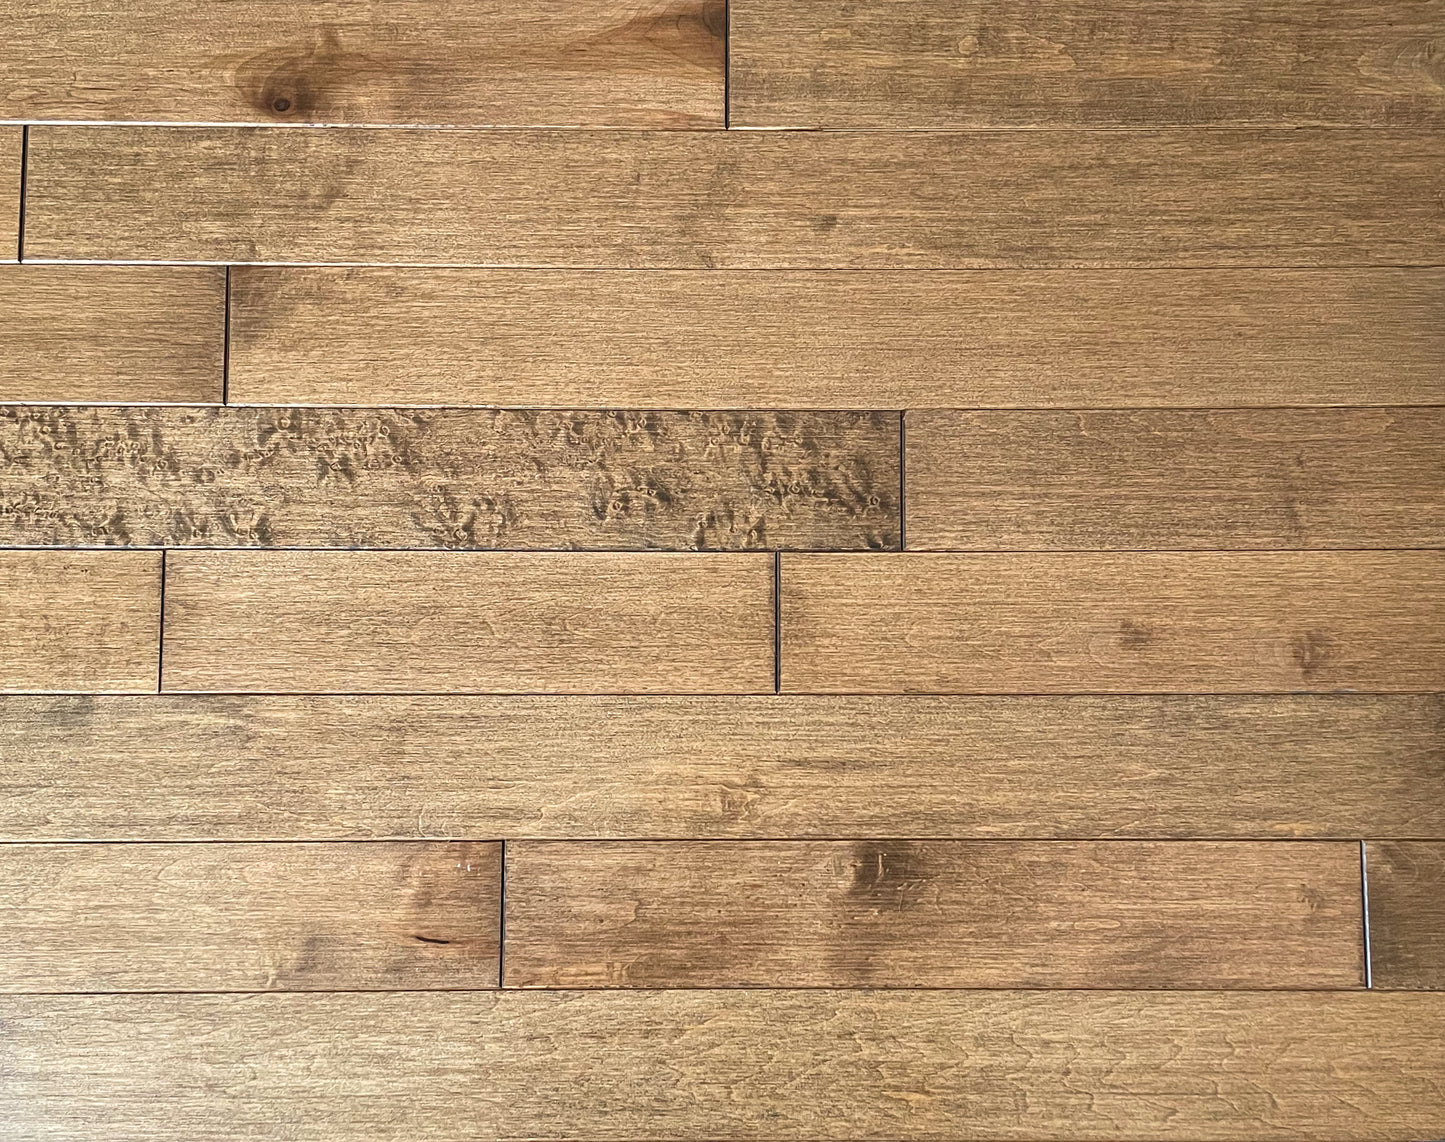 2 1/4" x 3/4" Prefinished Brandy Maple Hardwood Flooring